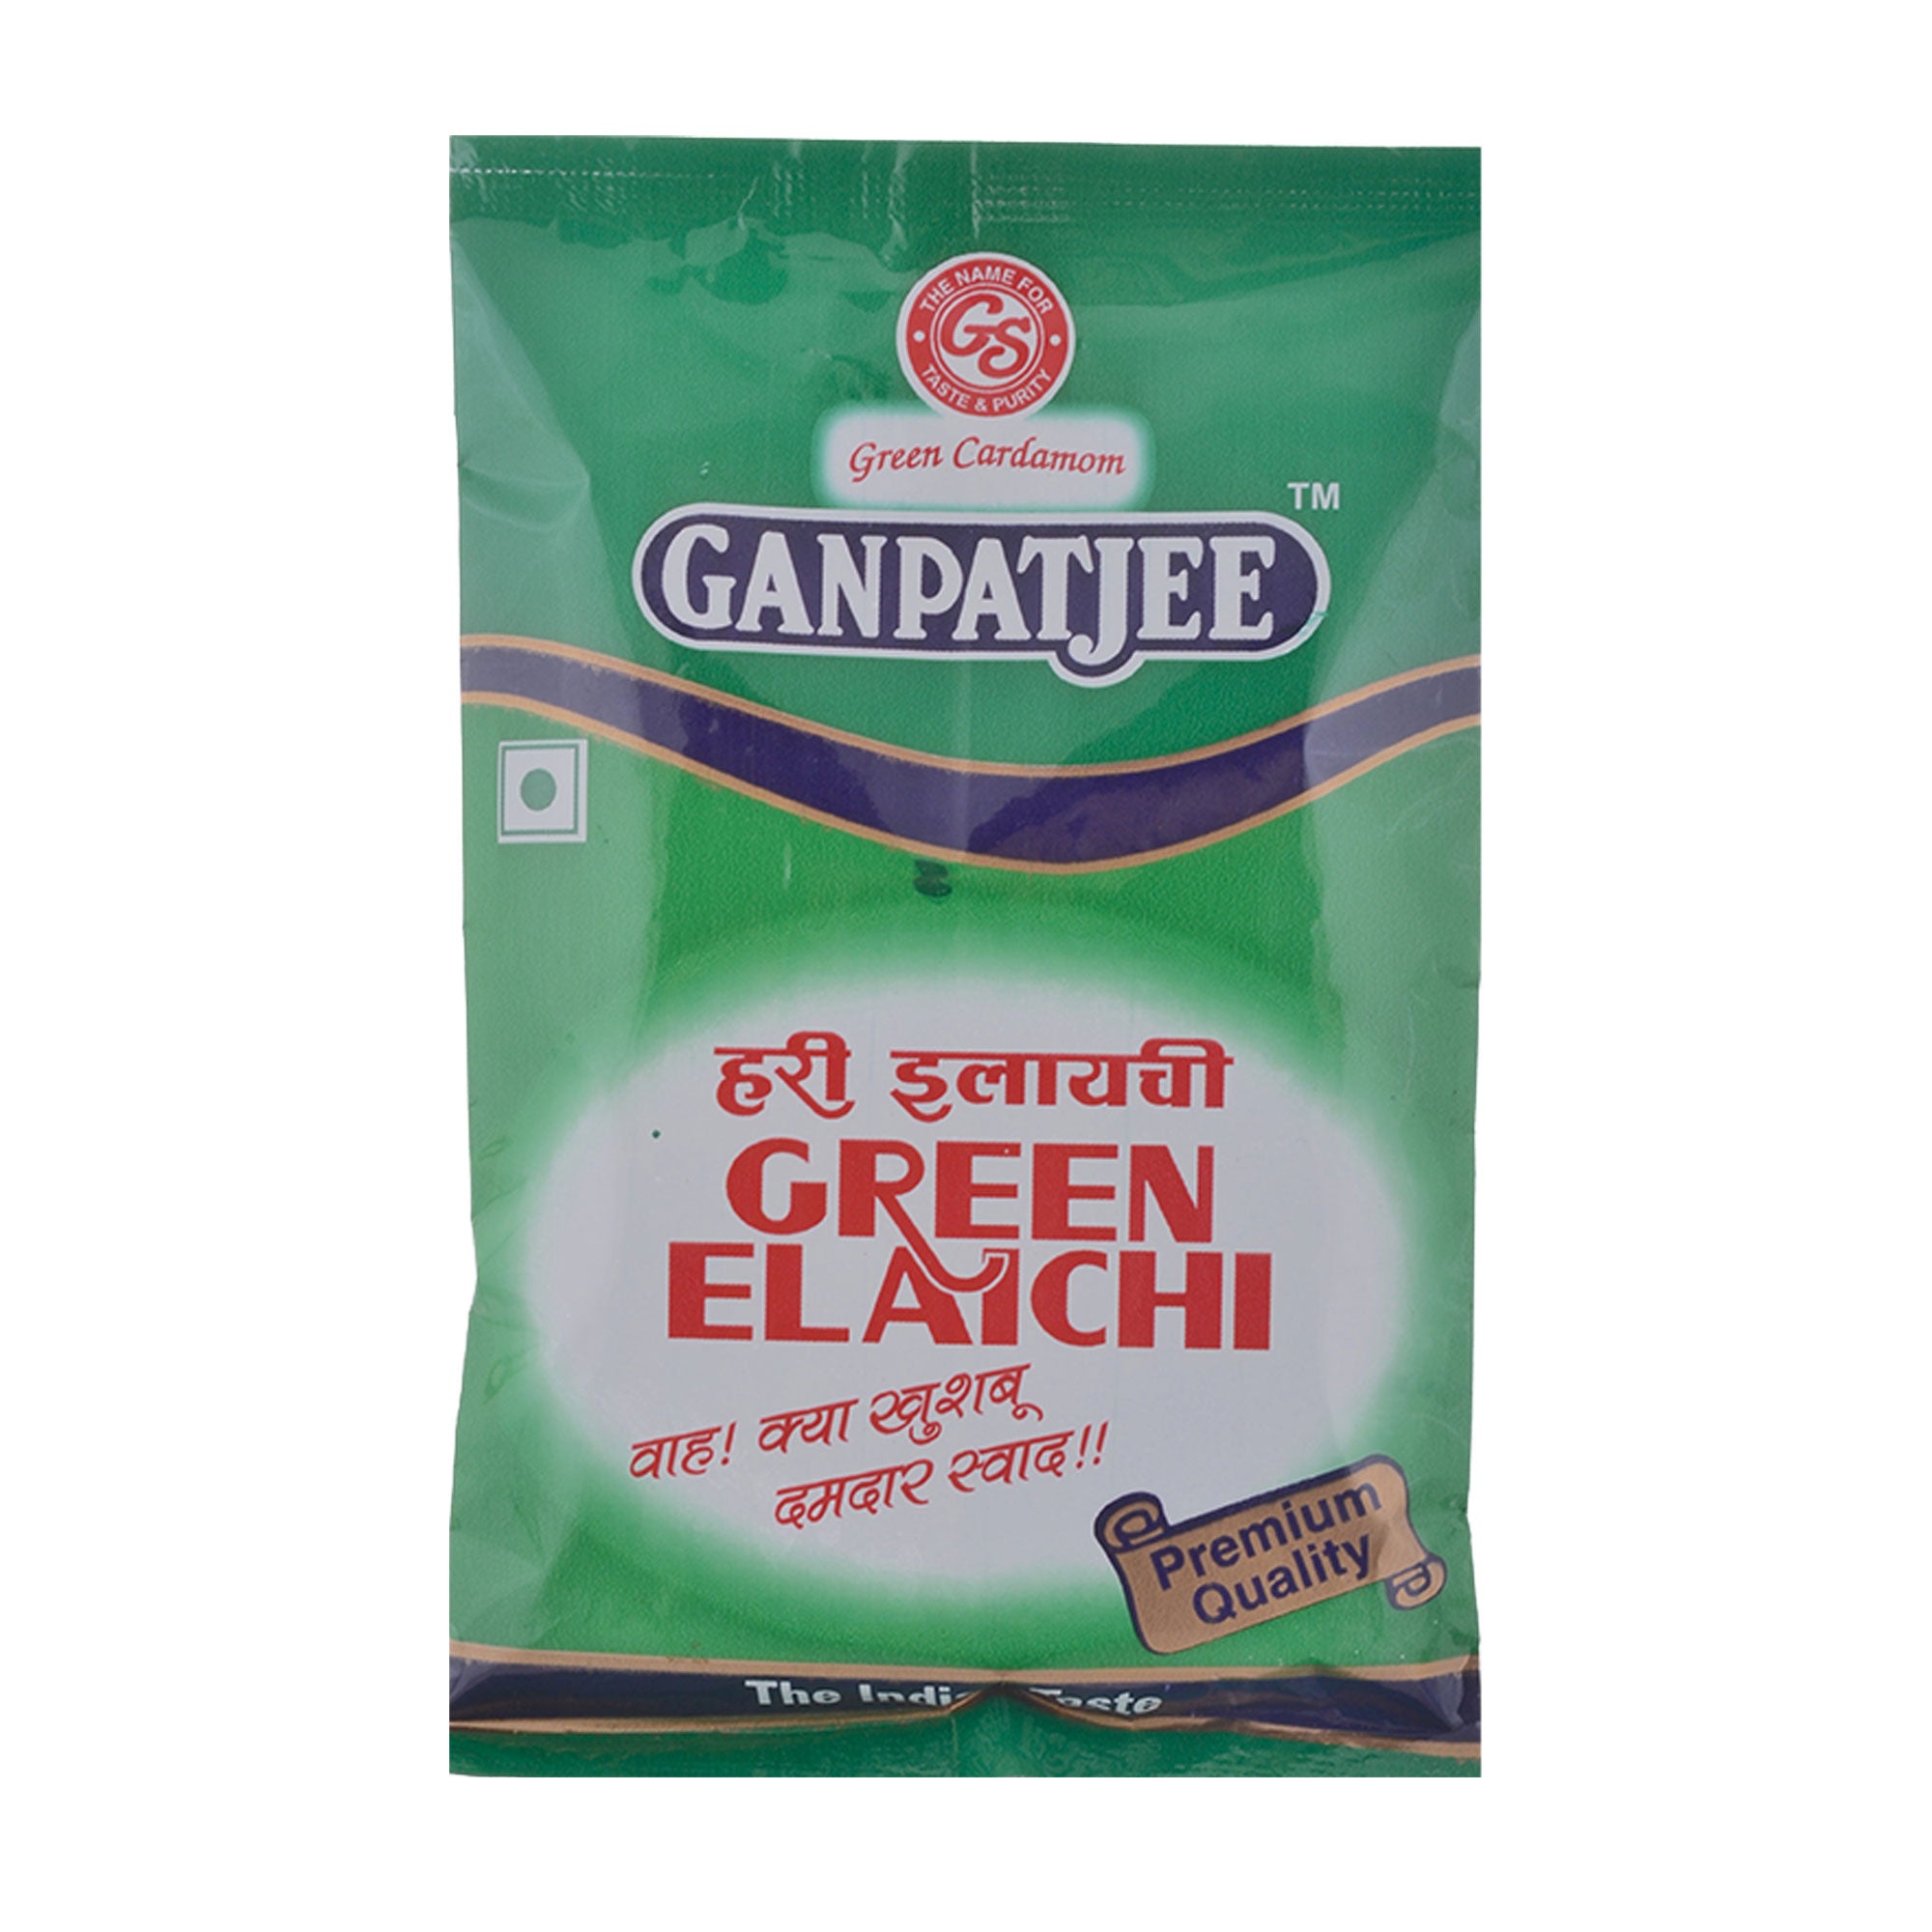 Ganpatjee Green Cardamom Elaichi, 50g